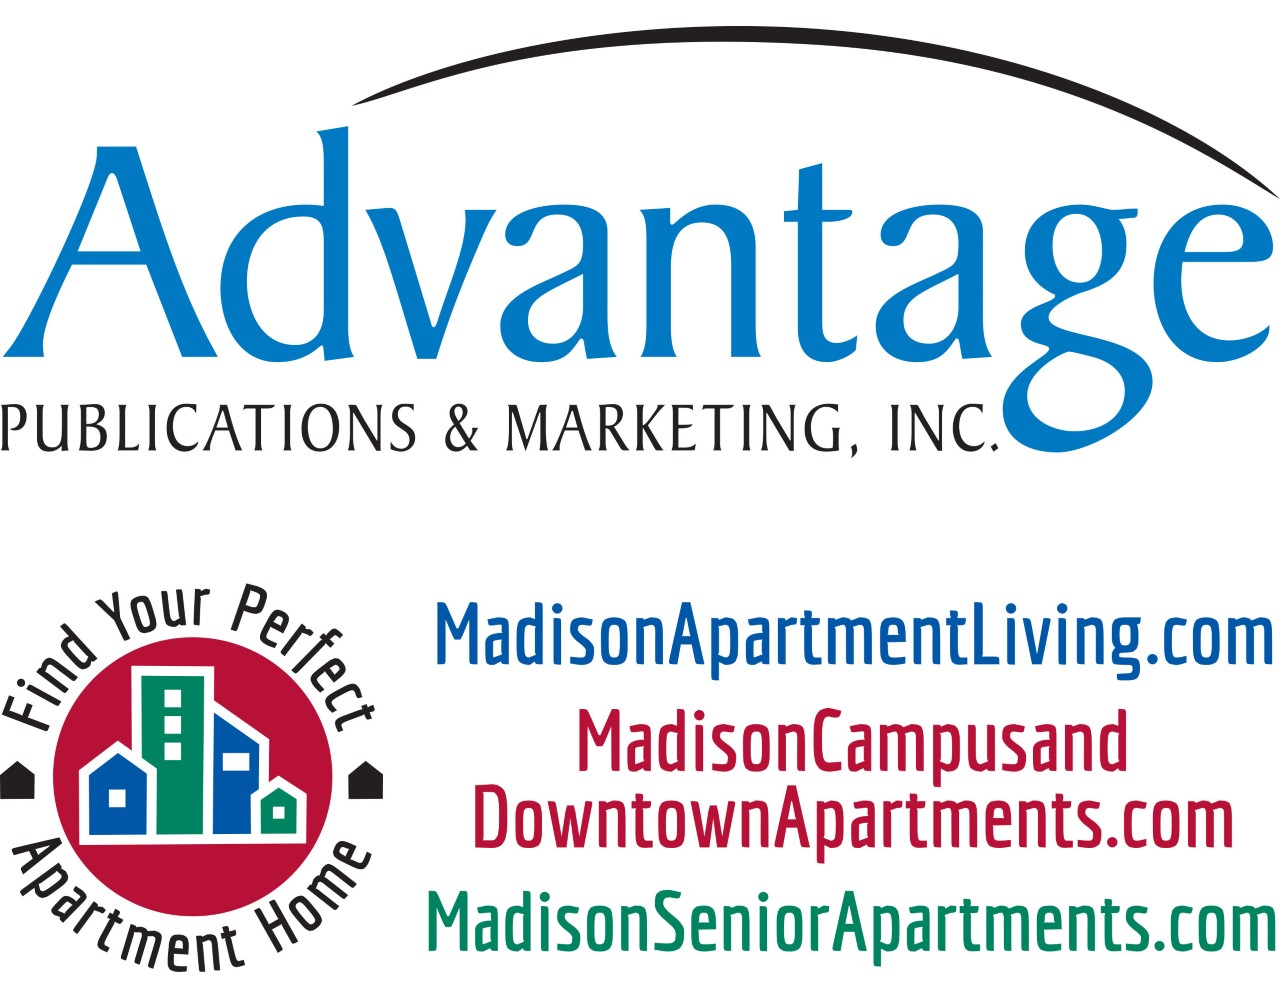 Advantage Publications & Marketing, Inc.